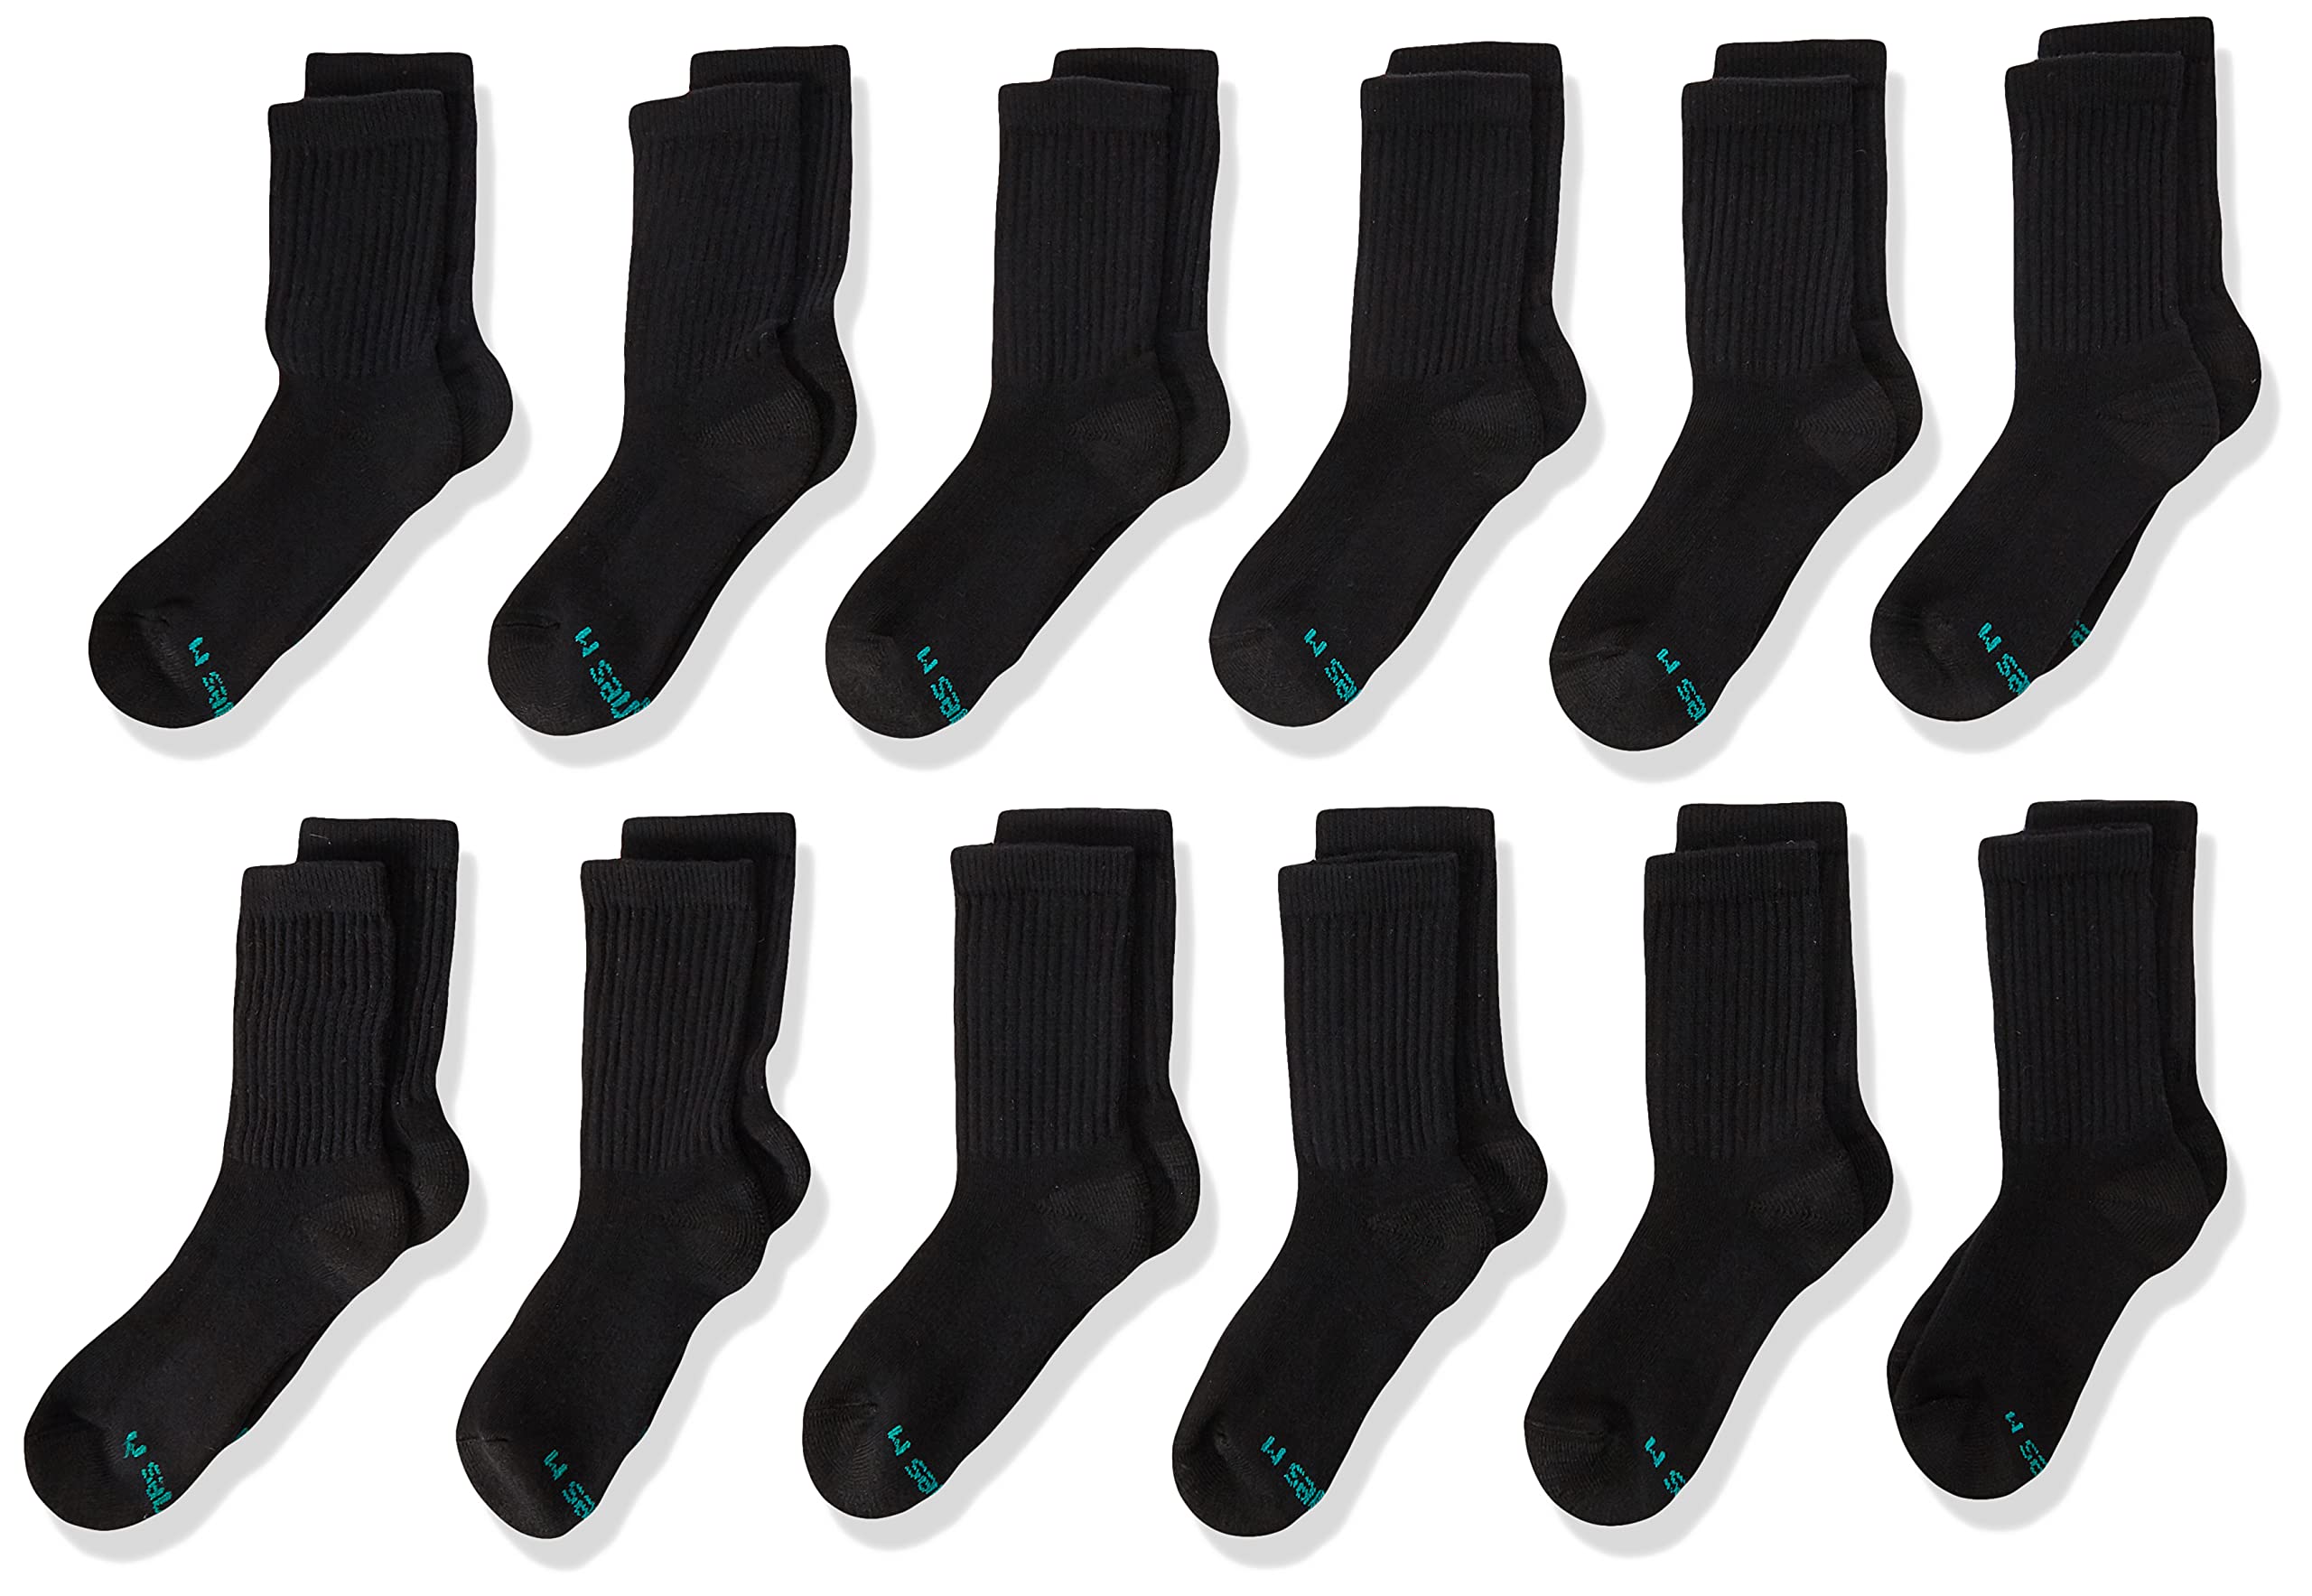 Hanes boys Hanes Boys' Socks, Double Tough Cushioned Crew Socks, 12-pair Packs